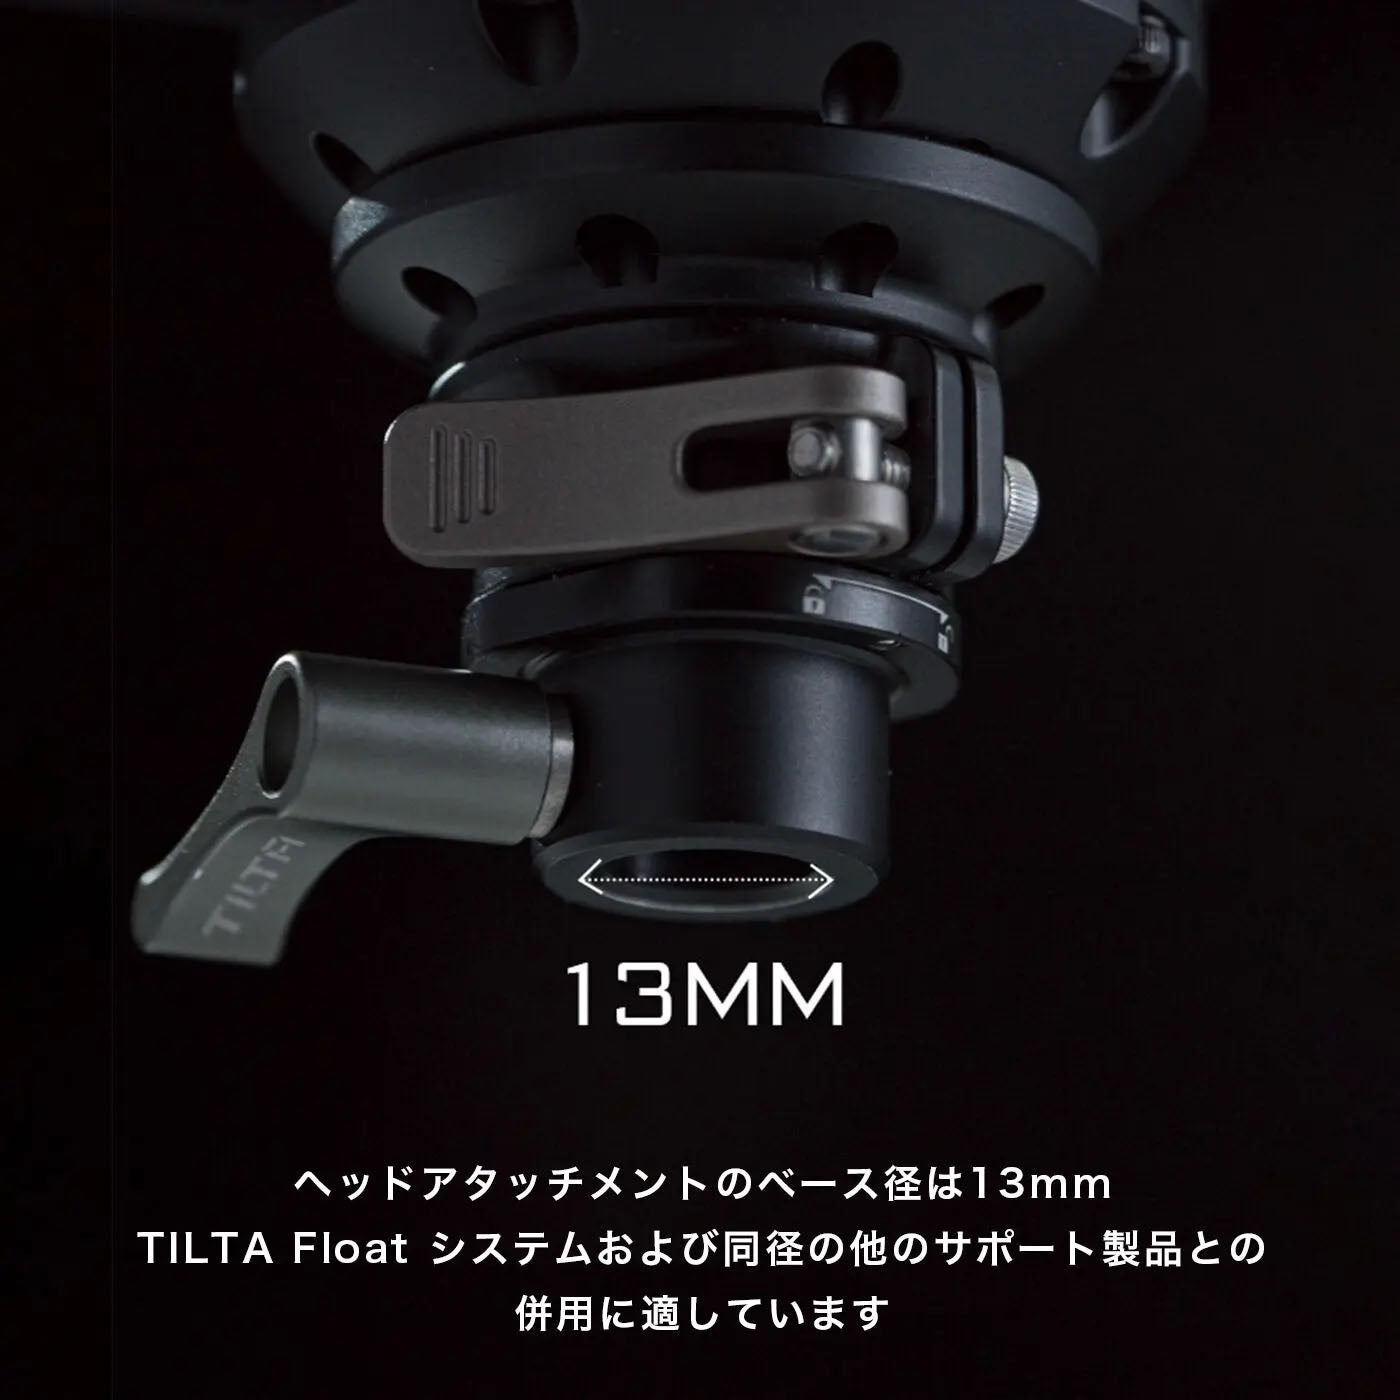 TILTA(ティルタ) Tilta Float Dual Handle Support System GSS-T03